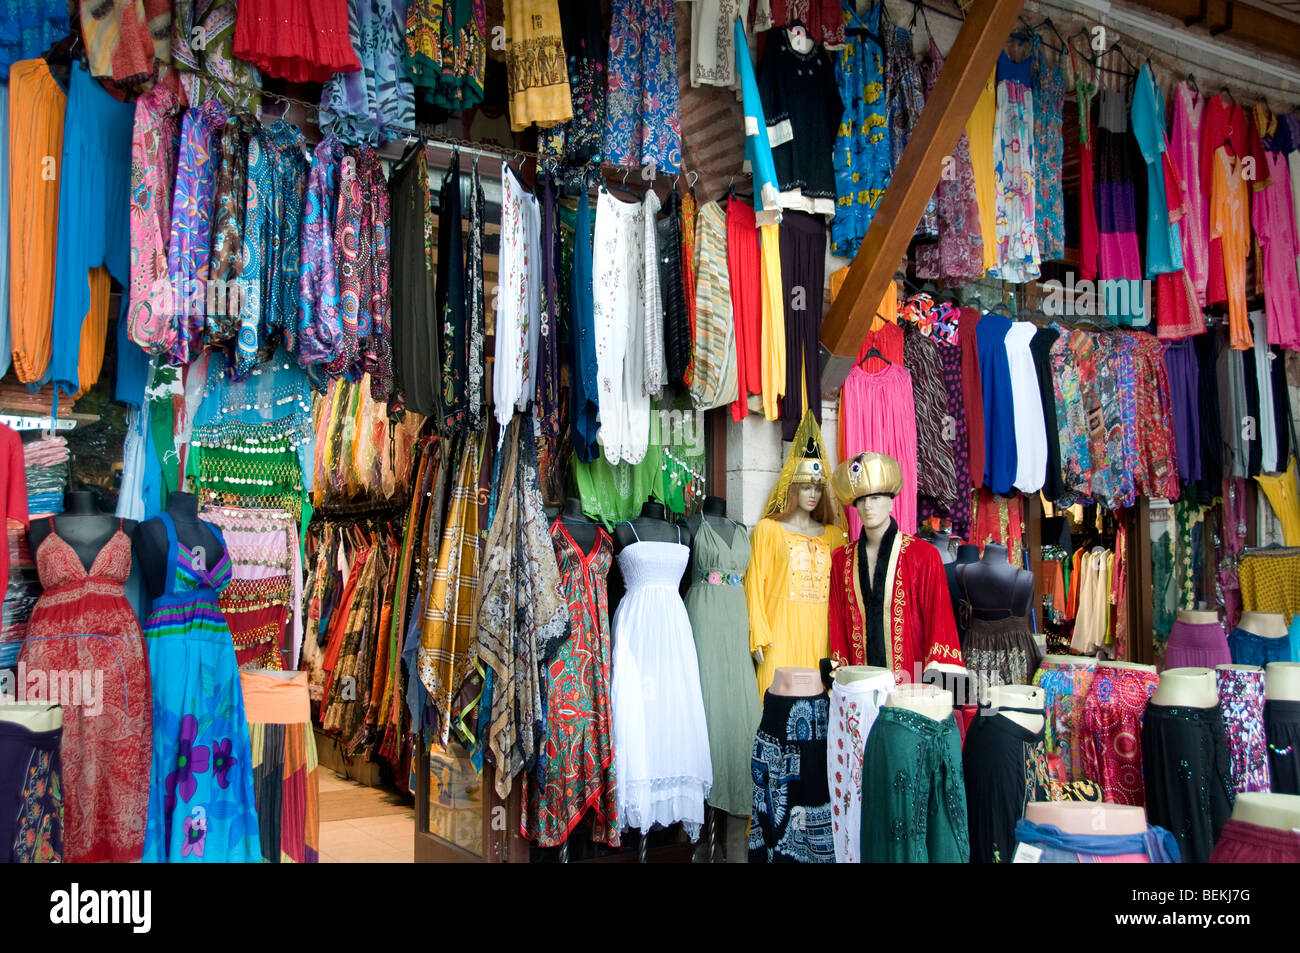 Grand Bazaar Kapali Carsi Kapalıcarsı Istanbul Turkey Stock Photo - Alamy